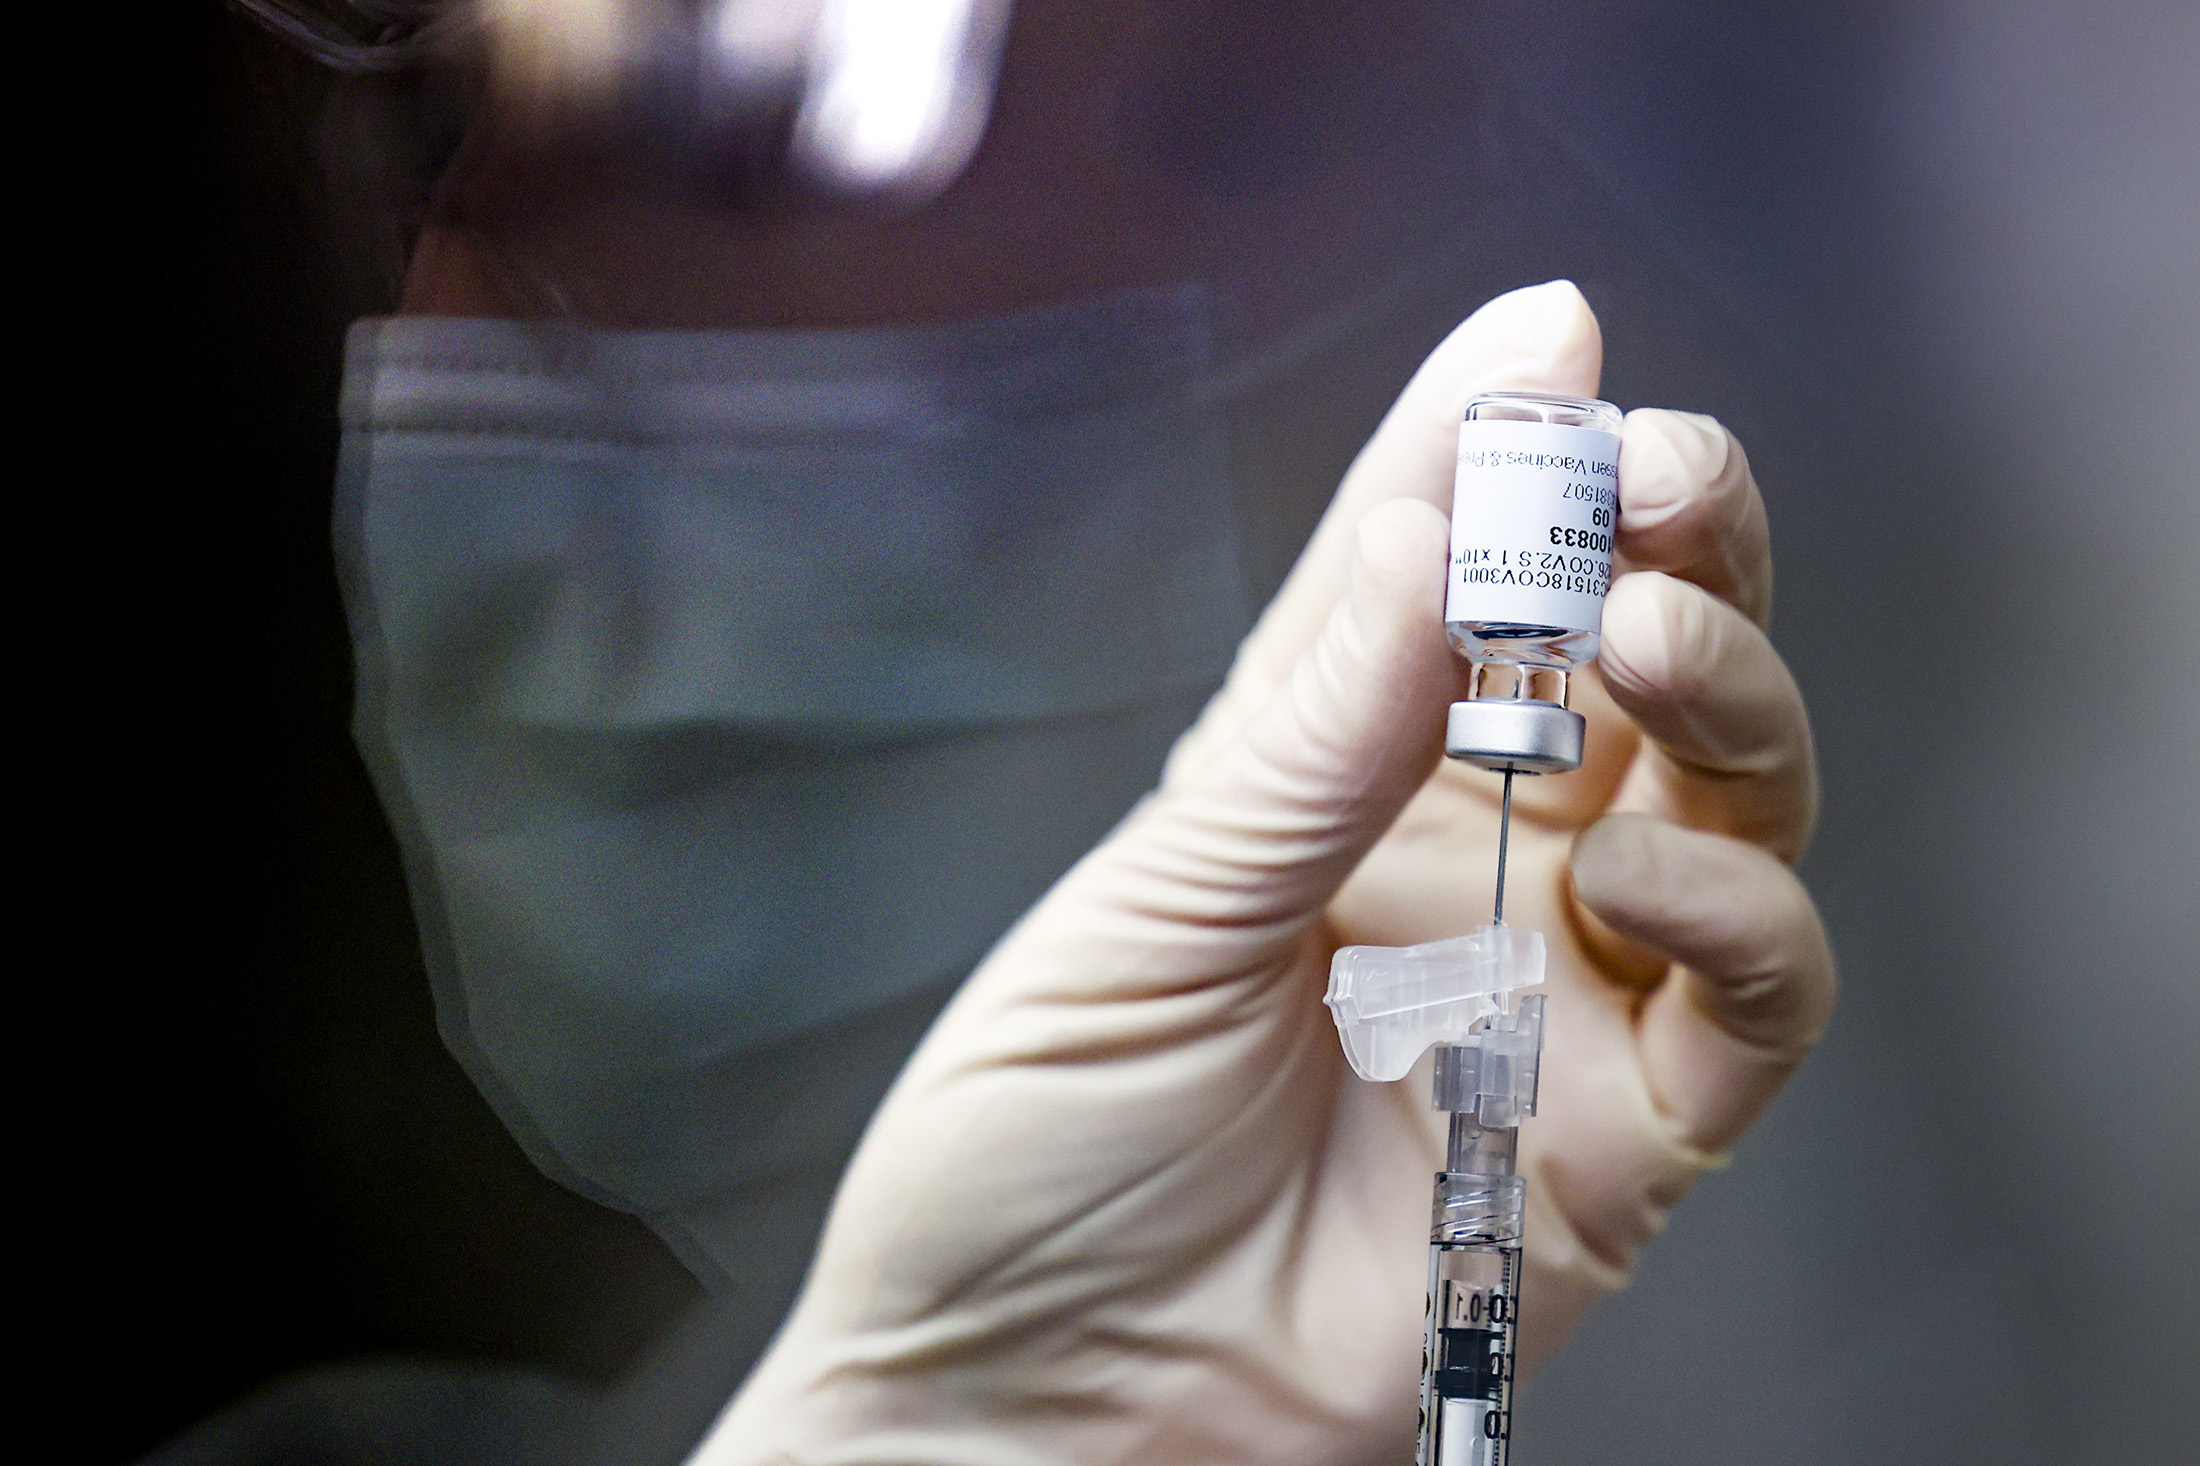 Eastern Colorado VA Receives Shipments Of Covid-19 Vaccines